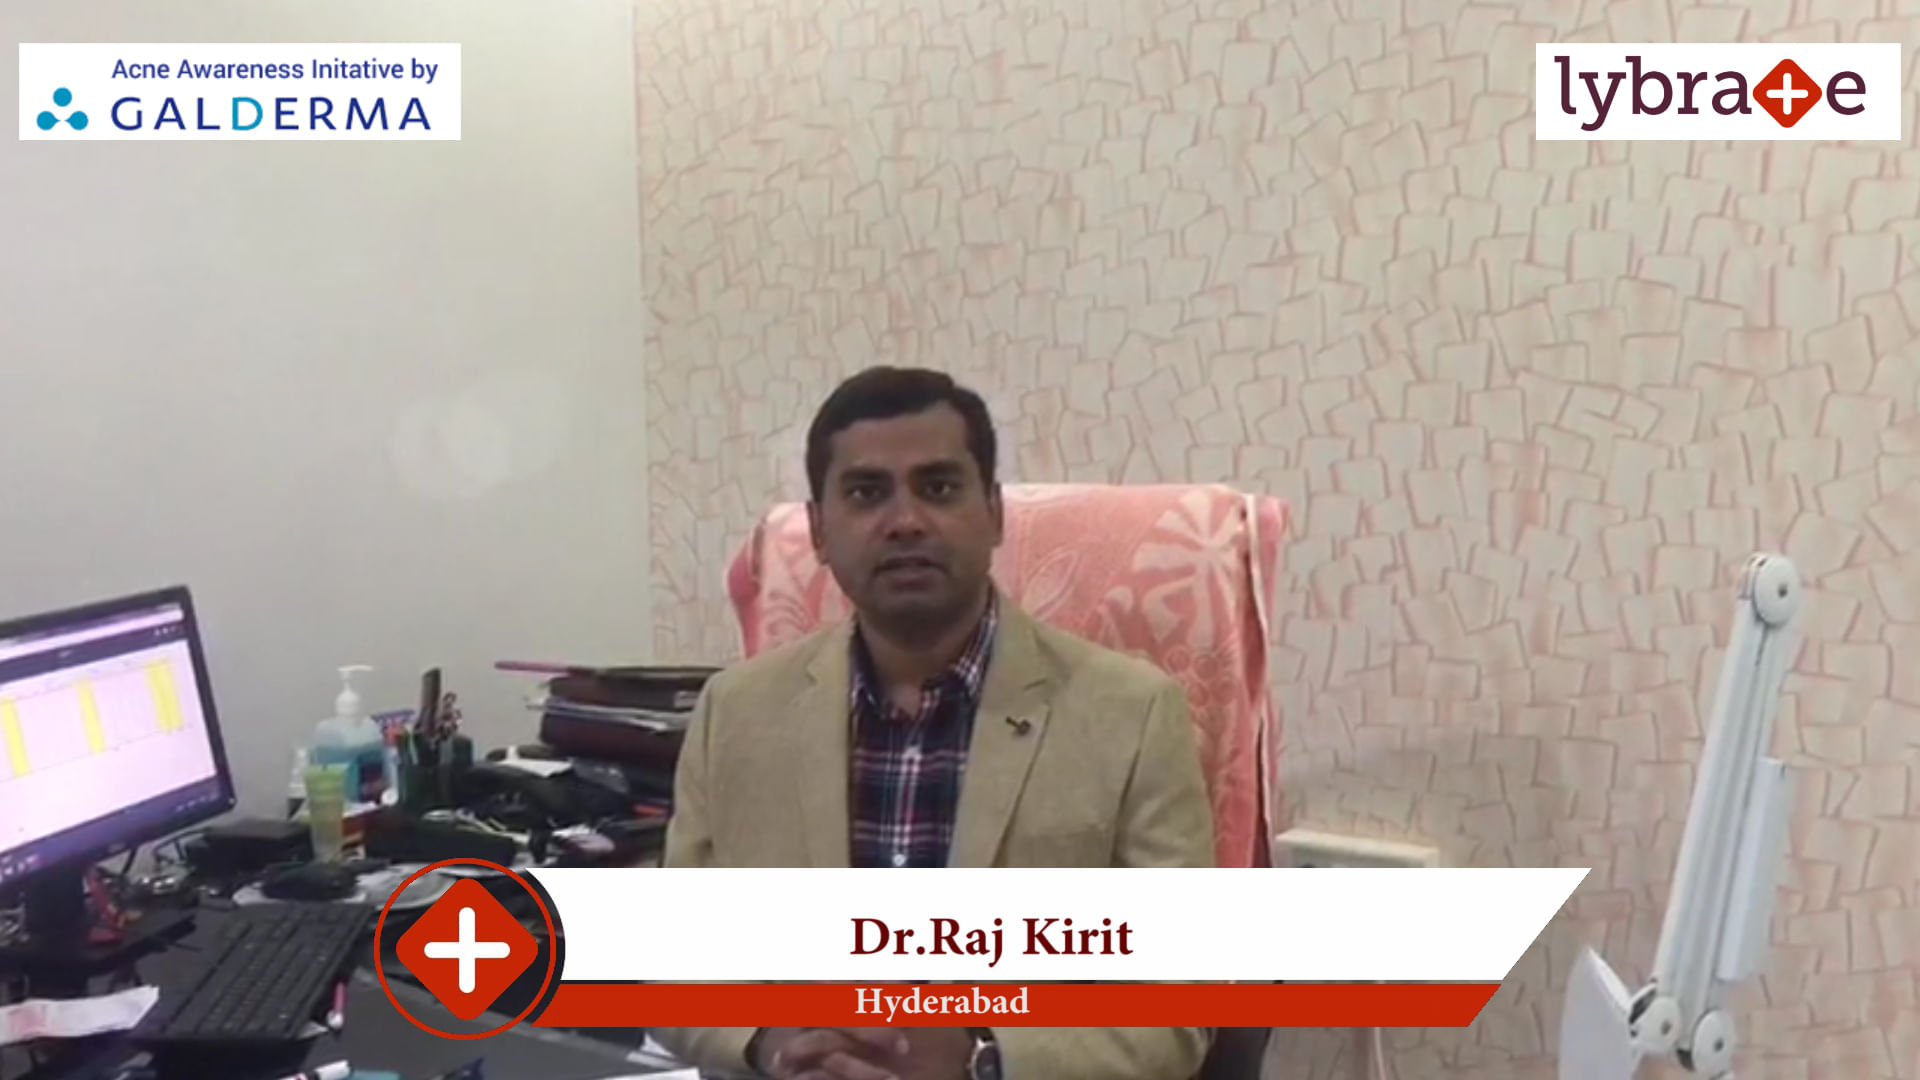 Lybrate | Dr. Raj Kirit speaks on IMPORTANCE OF TREATING ACNE EARLY